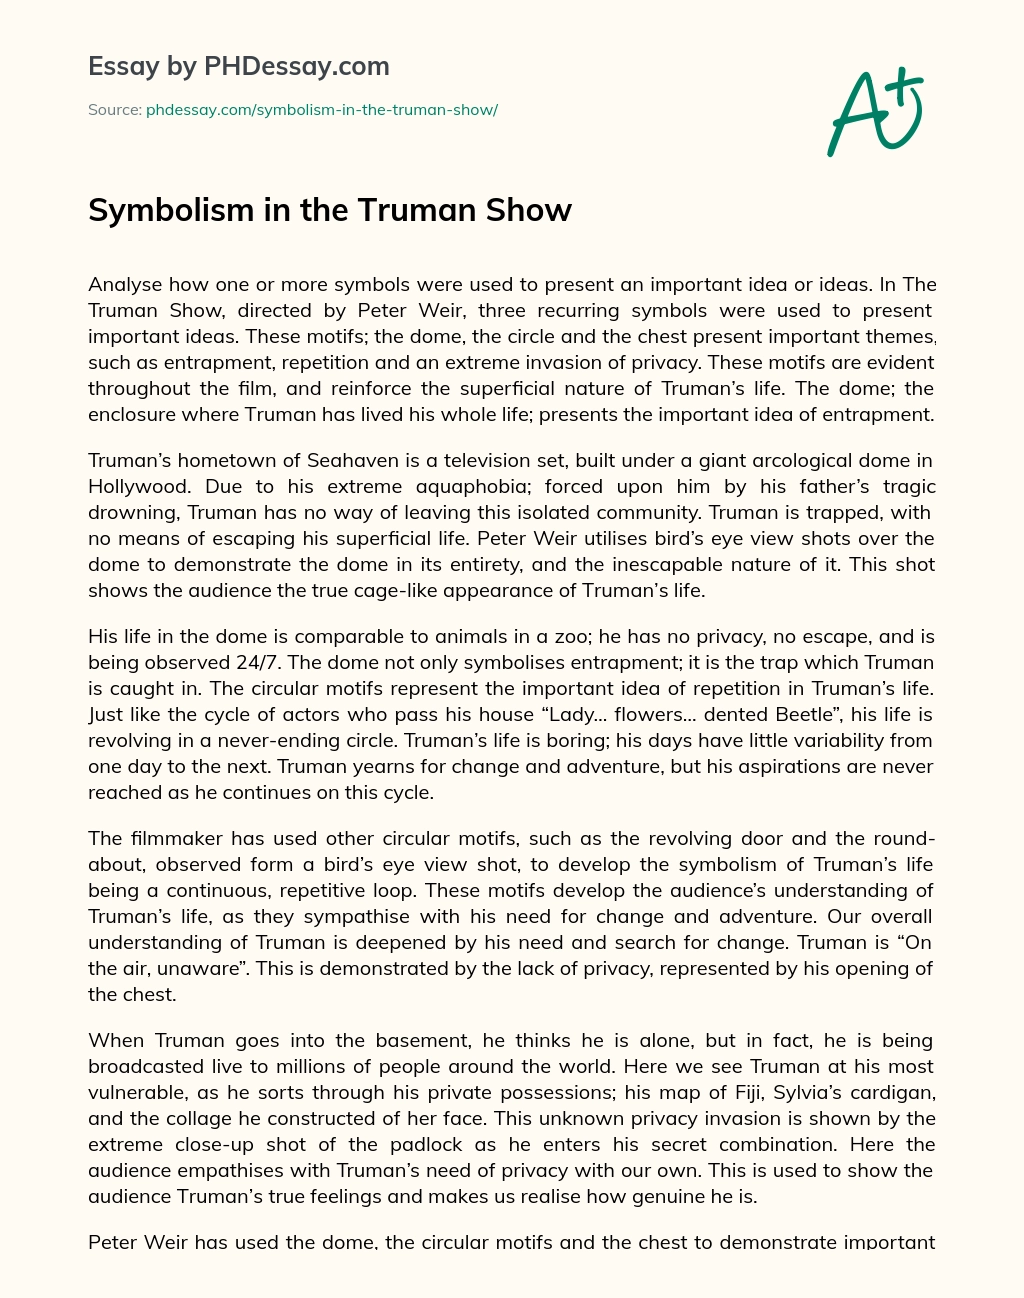 Symbolism in the Truman Show essay